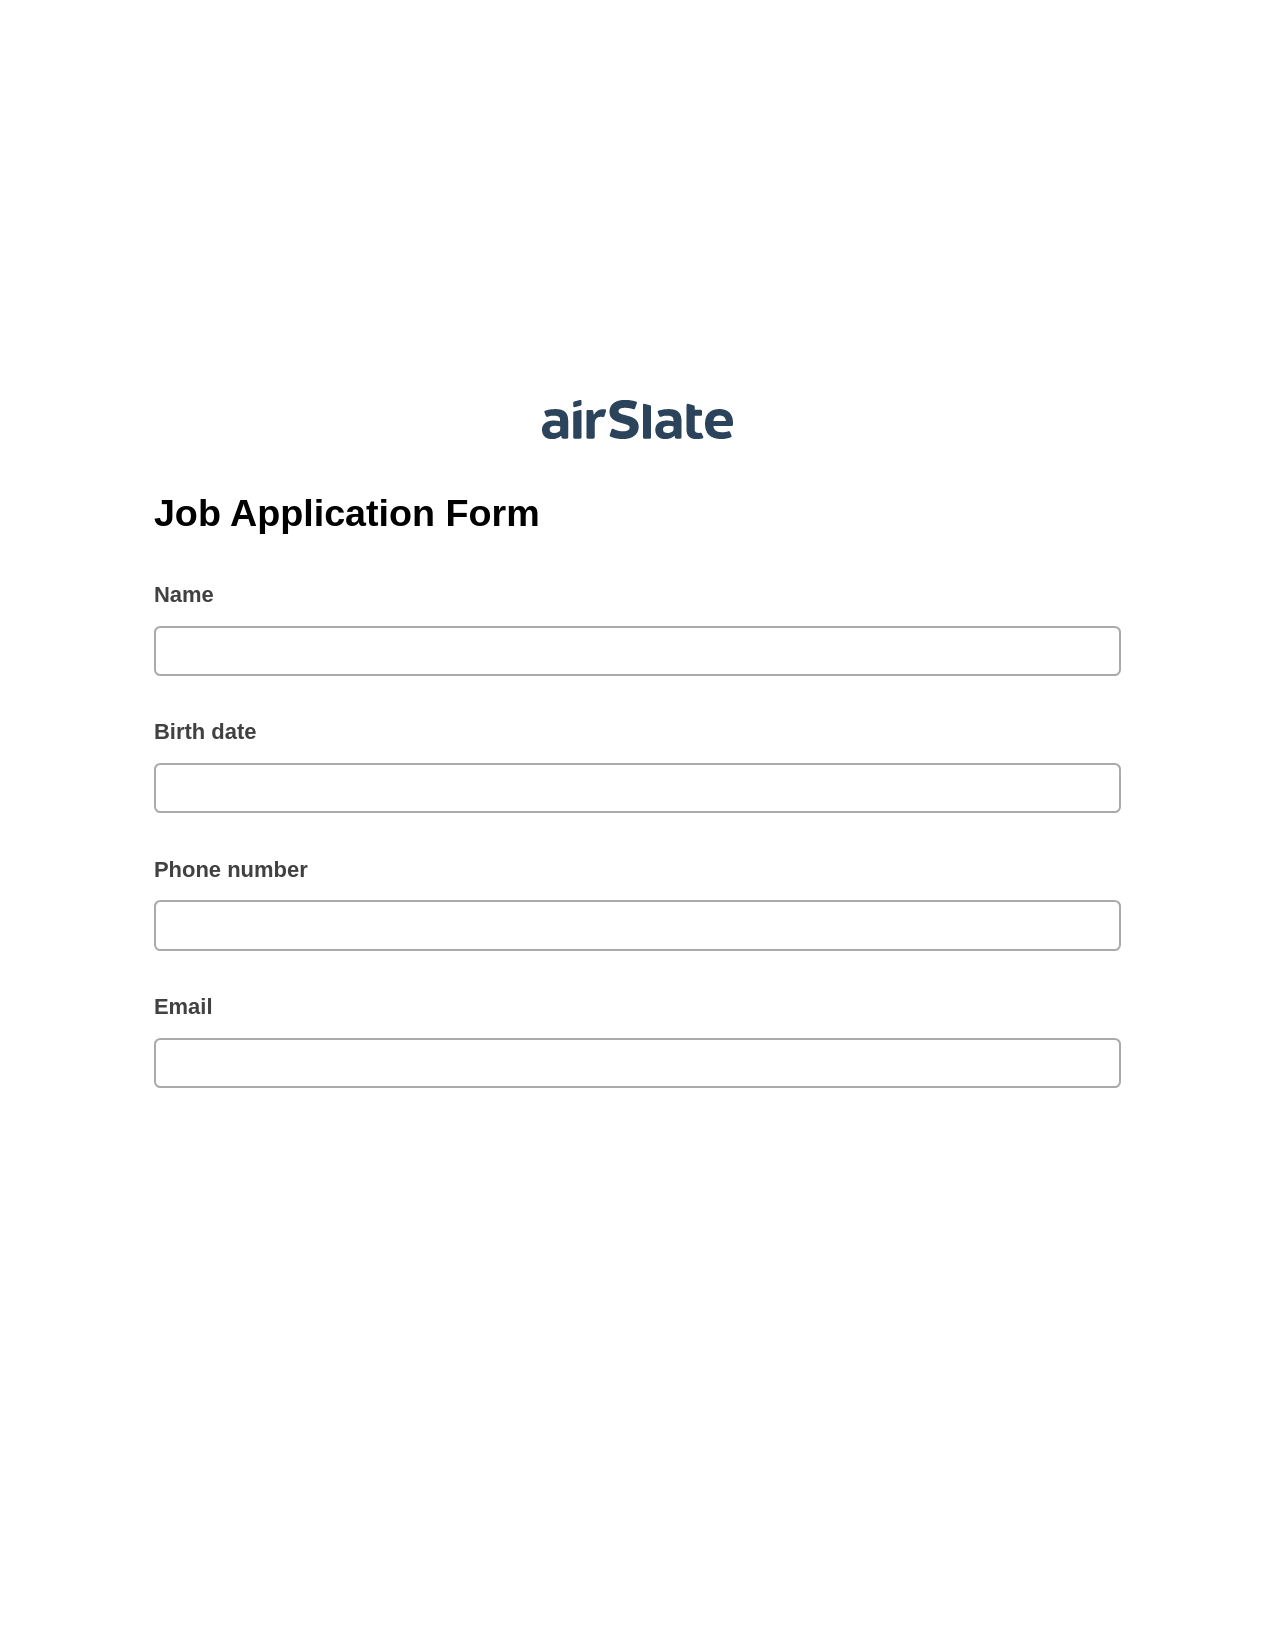 Job Application Form Pre-fill Dropdowns from Office 365 Excel Bot, Audit Trail Bot, Slack Notification Postfinish Bot